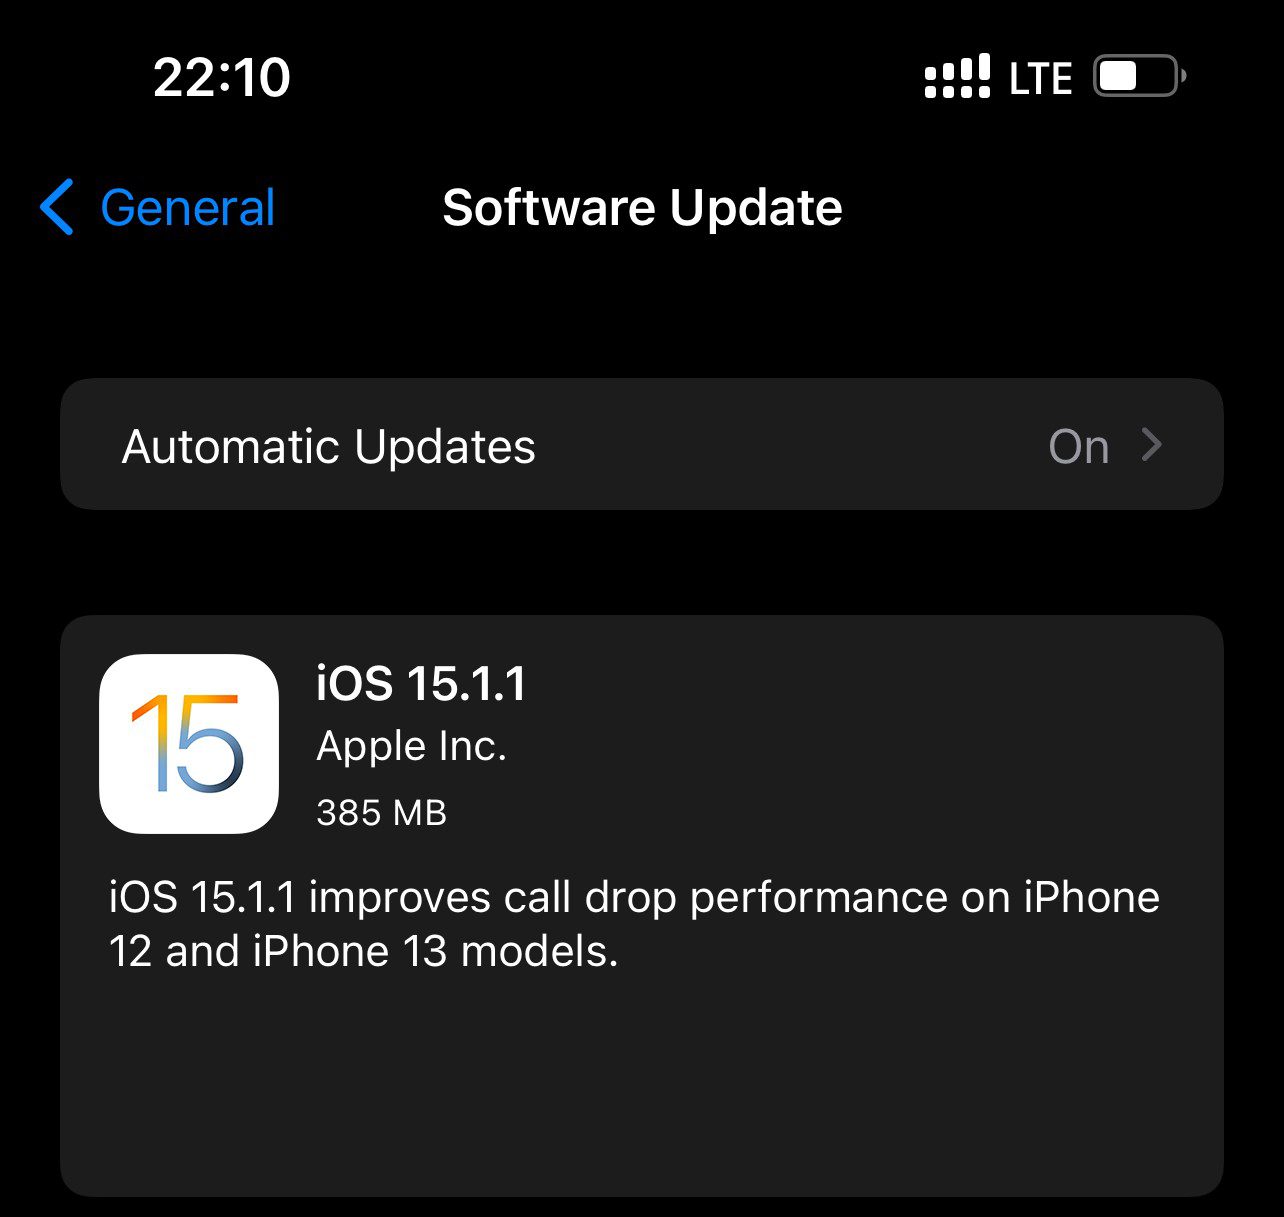 IOS 15.1 software update